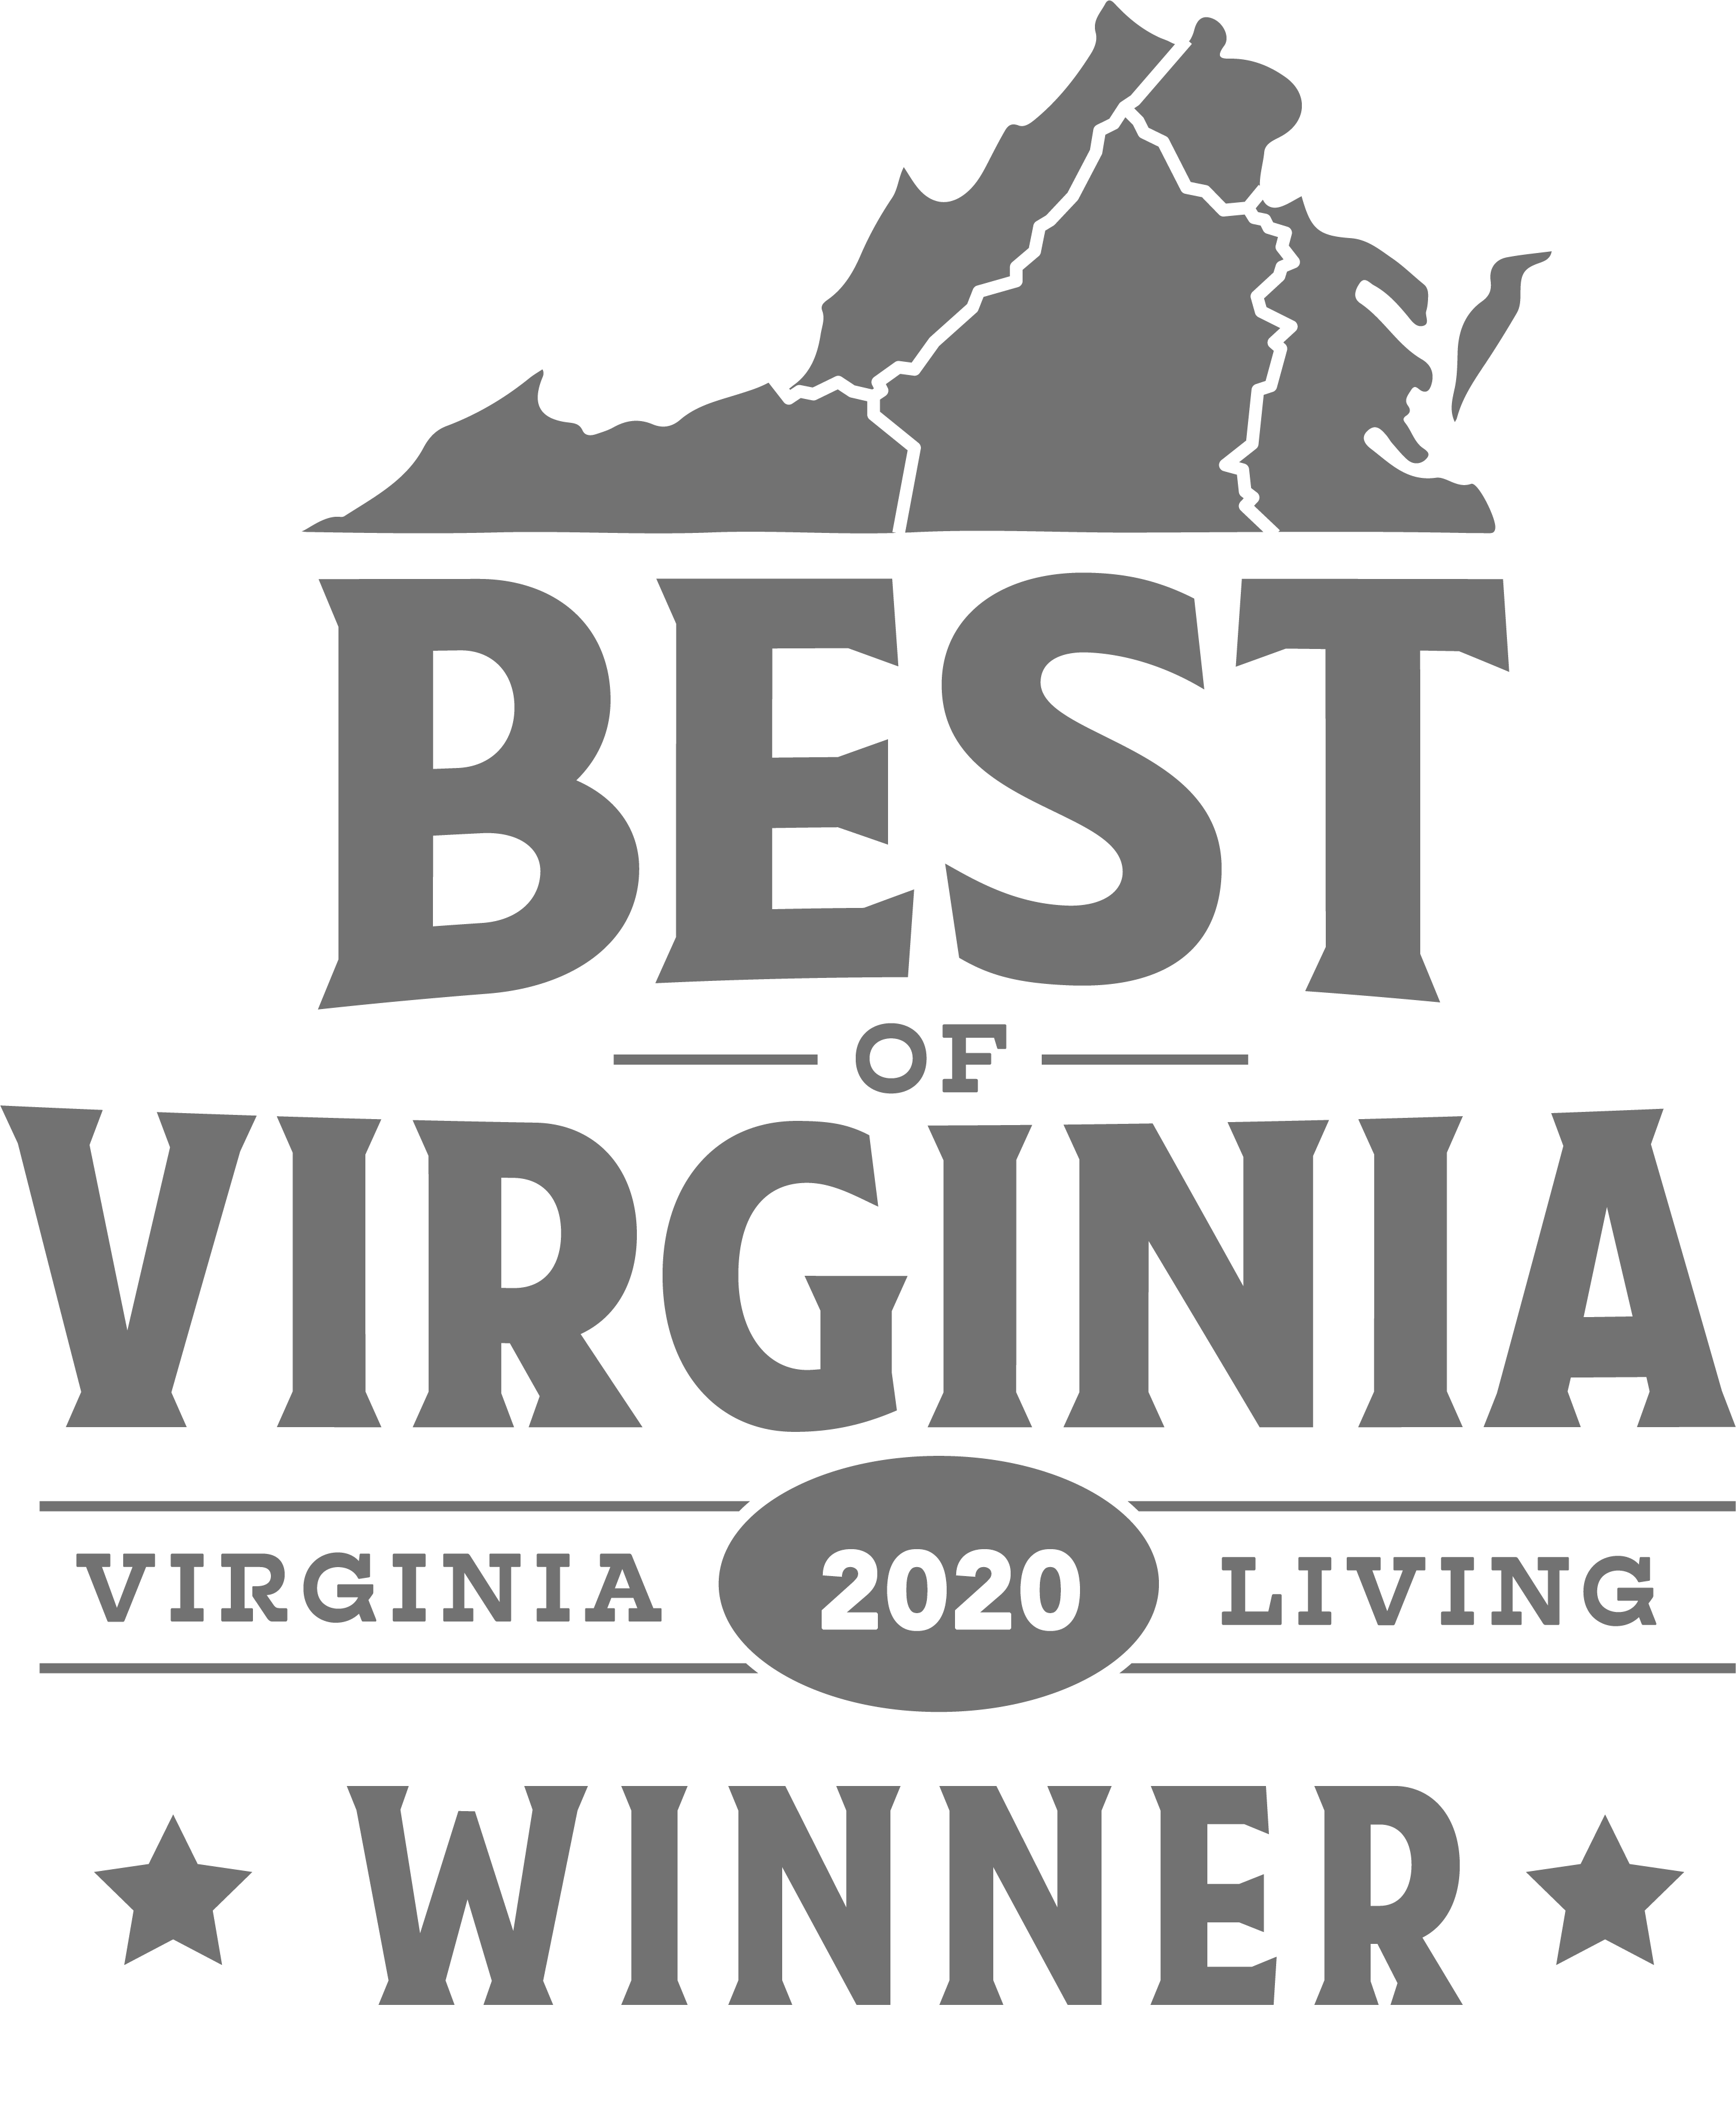 Virginia living magazine best of Virginia winner